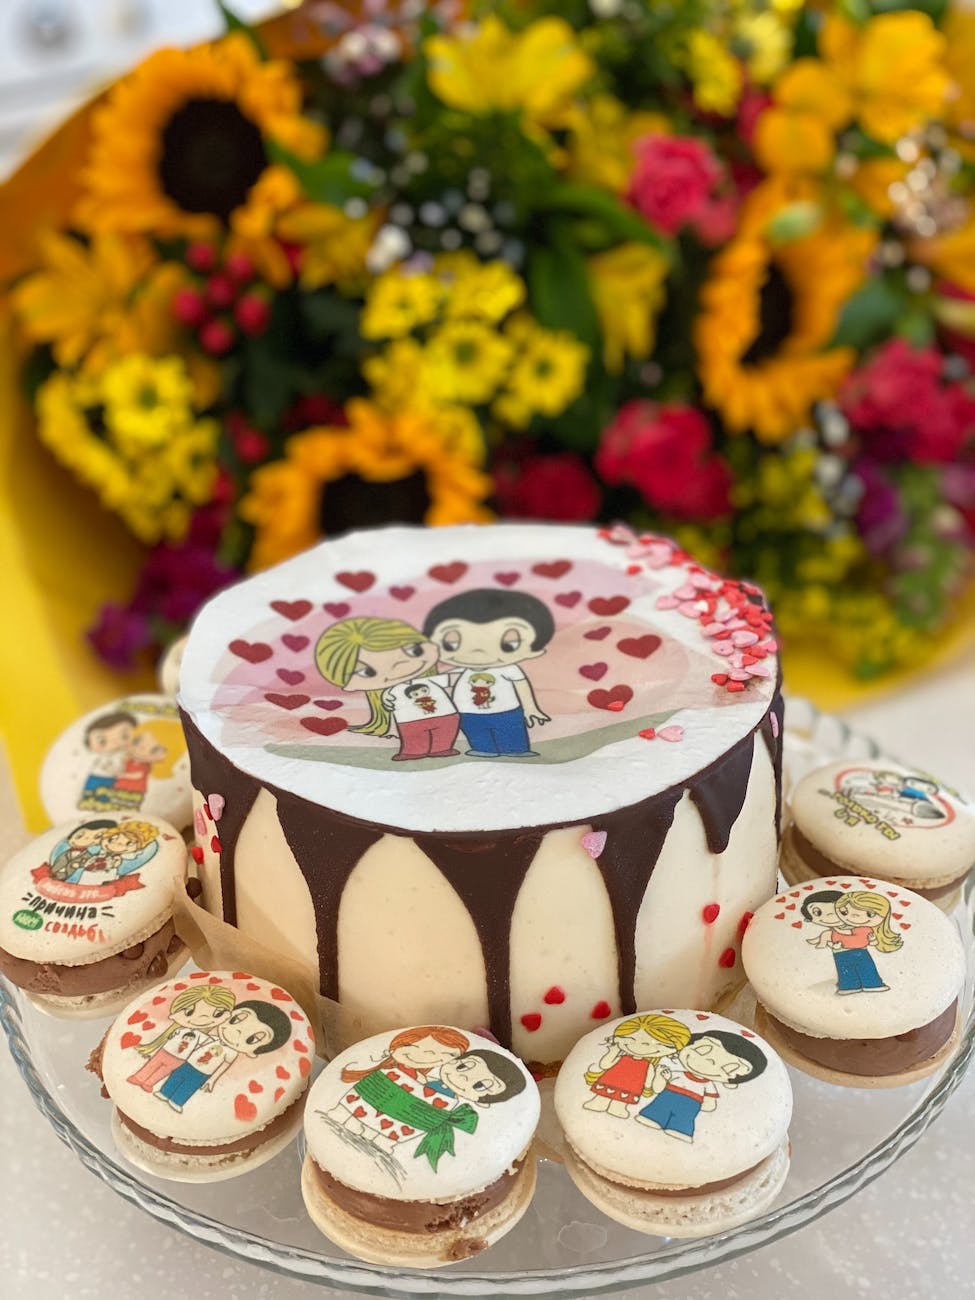 round cake with couple design